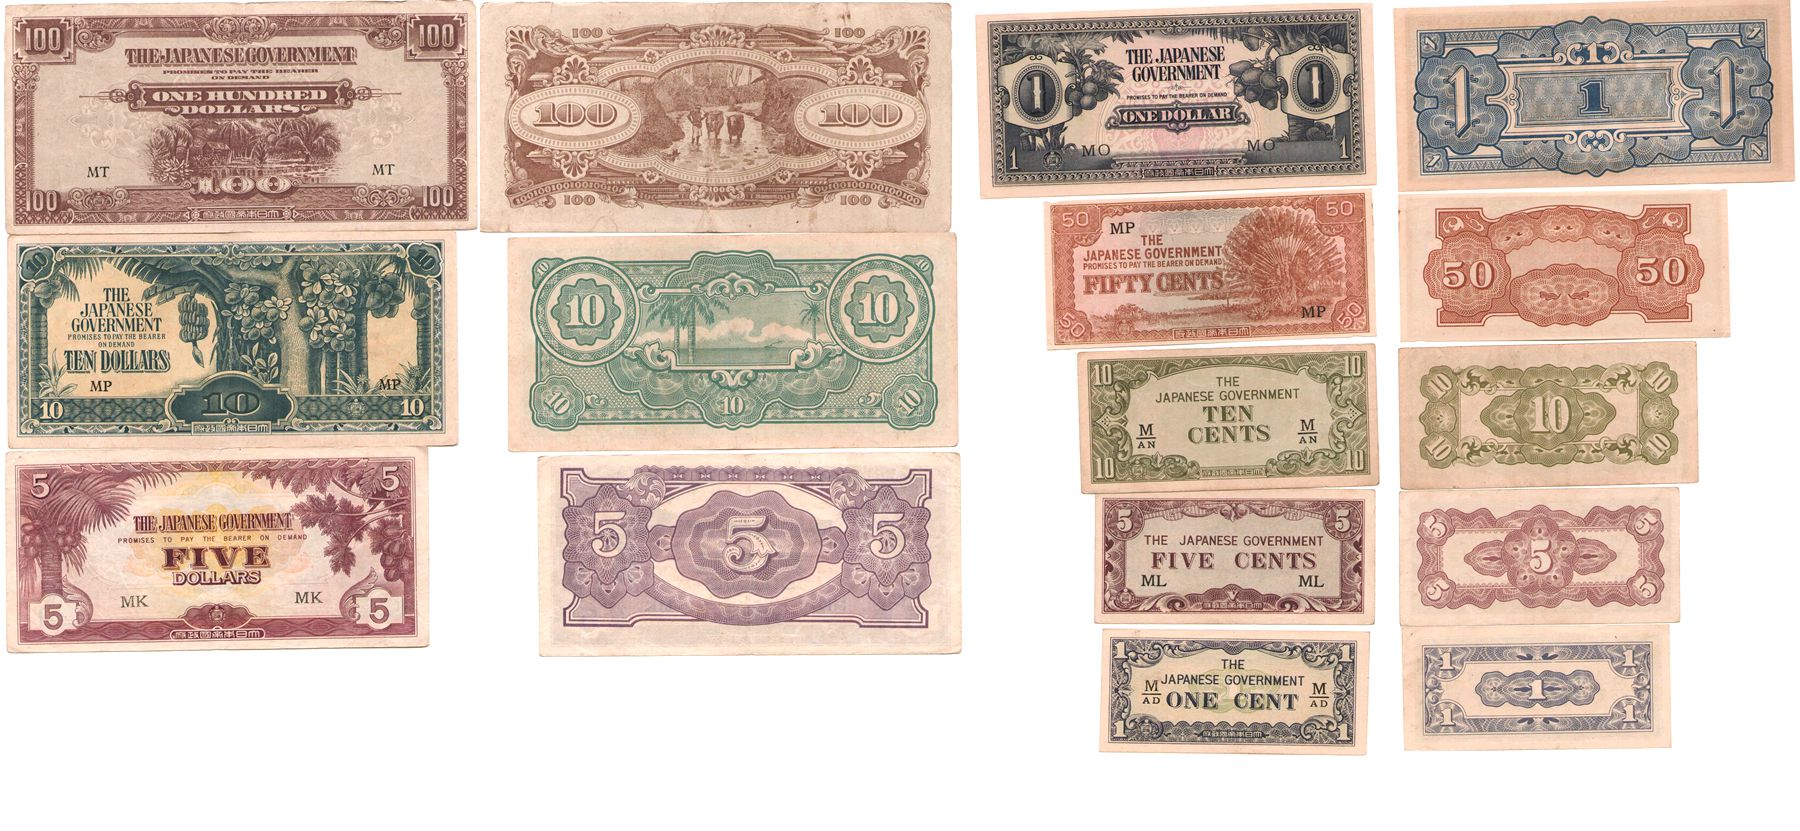 T2102, Malaya Malaysia Banknotes Full 8 Pcs, Japanese Occupation (1942)